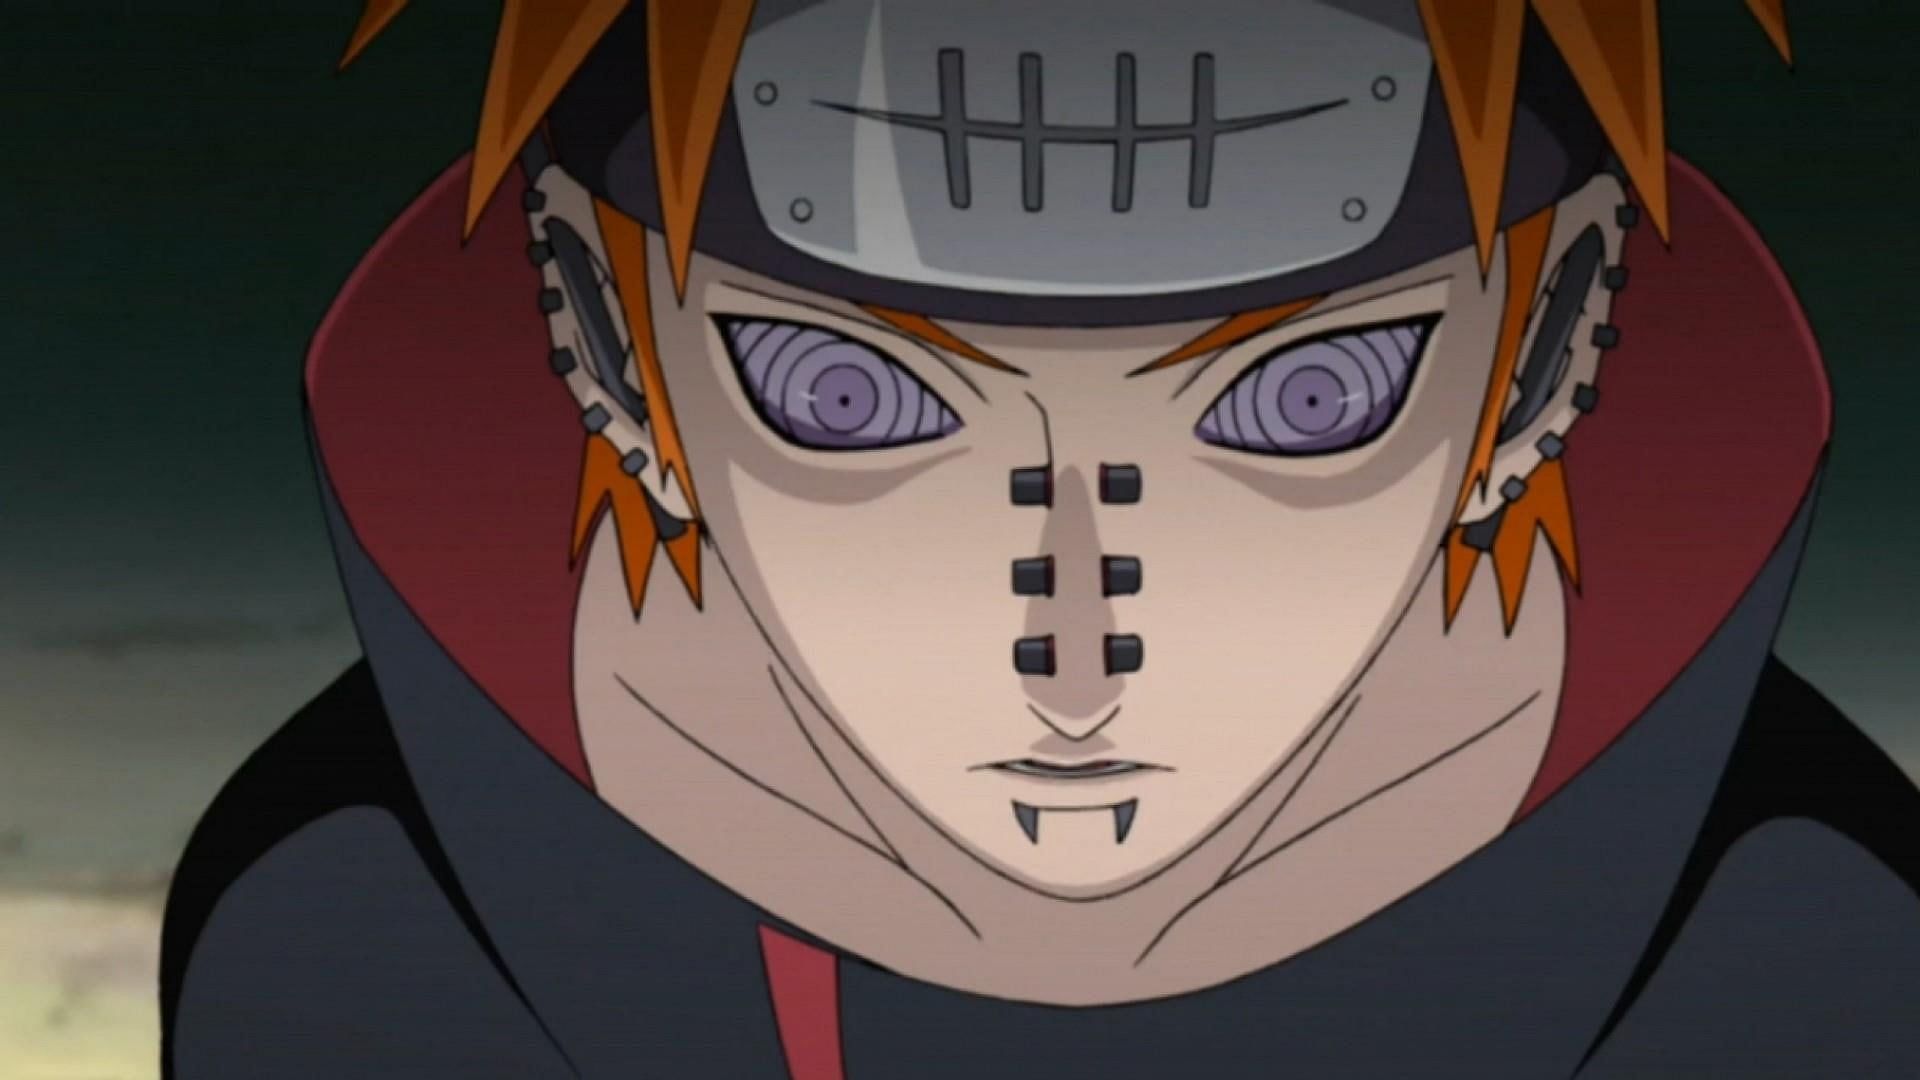 Pain as seen in Naruto: Shippuden (Image via Studio Pierrot)